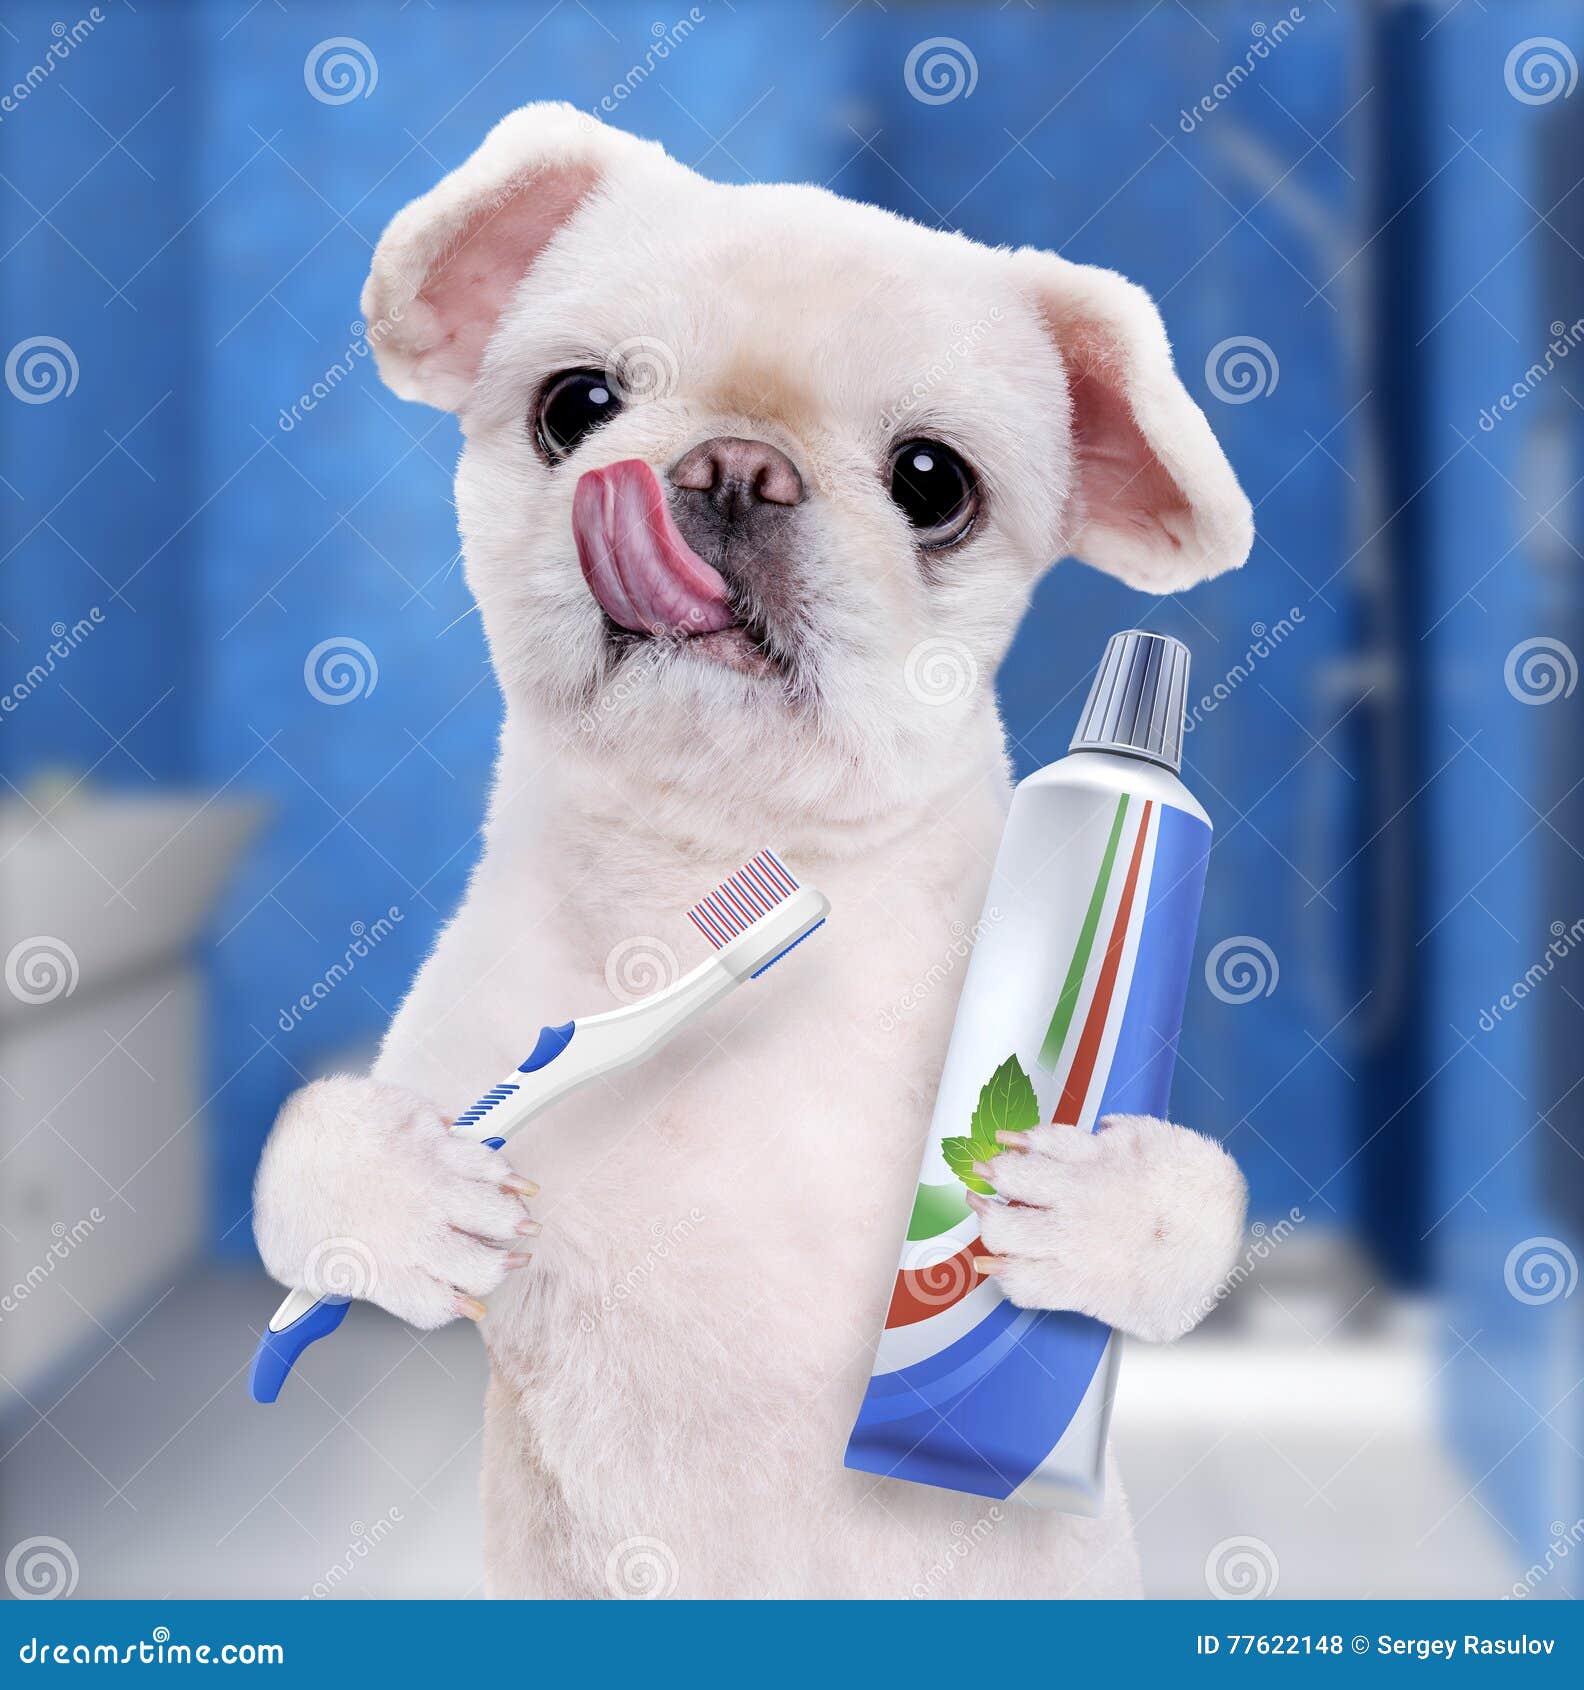 brushing teeth dog .